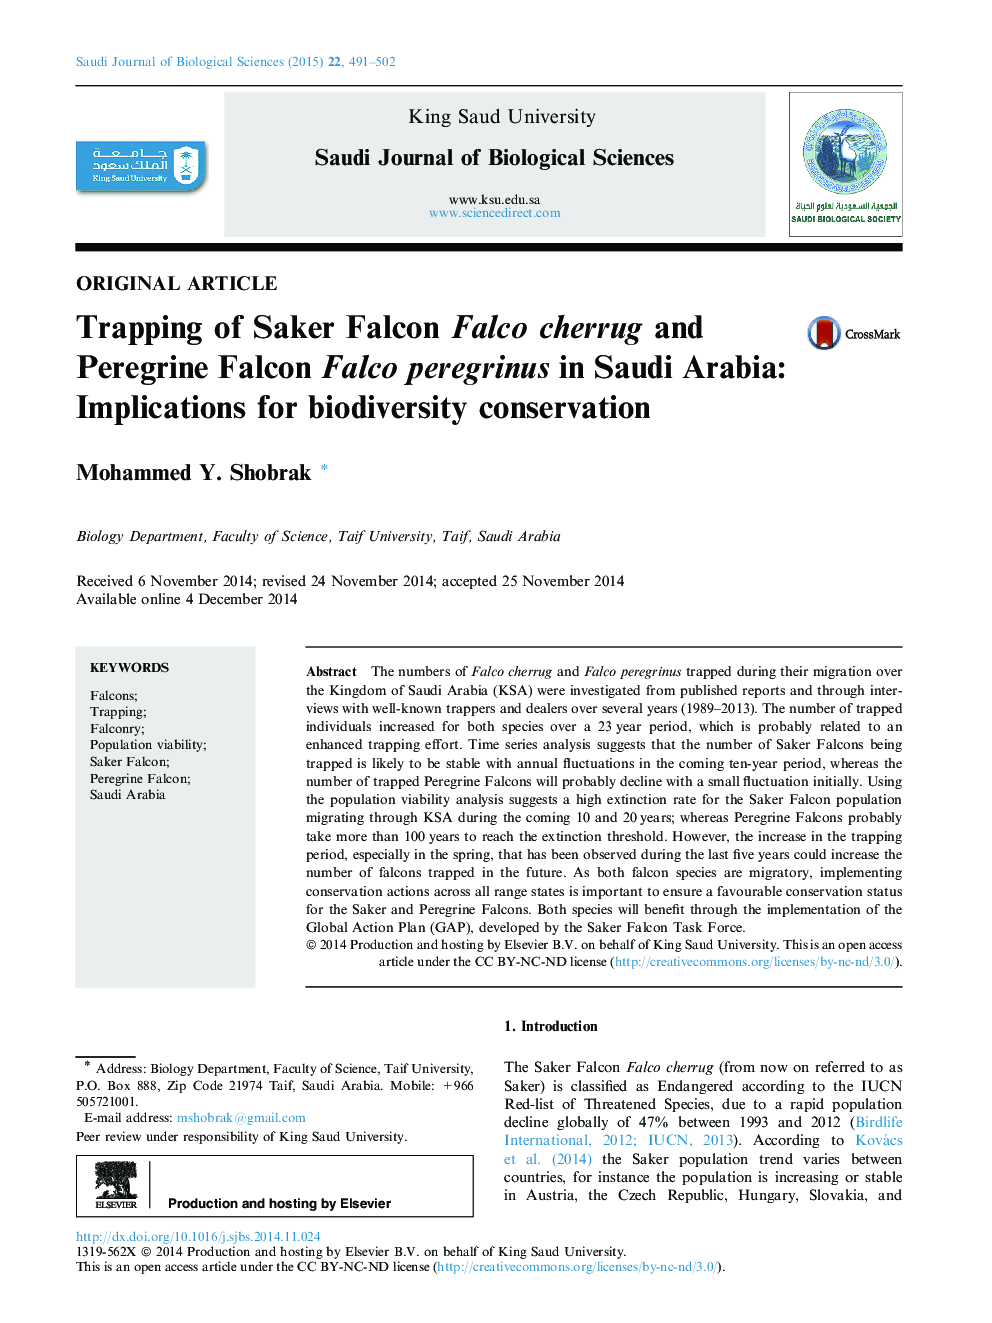 Trapping of Saker Falcon Falco cherrug and Peregrine Falcon Falco peregrinus in Saudi Arabia: Implications for biodiversity conservation 